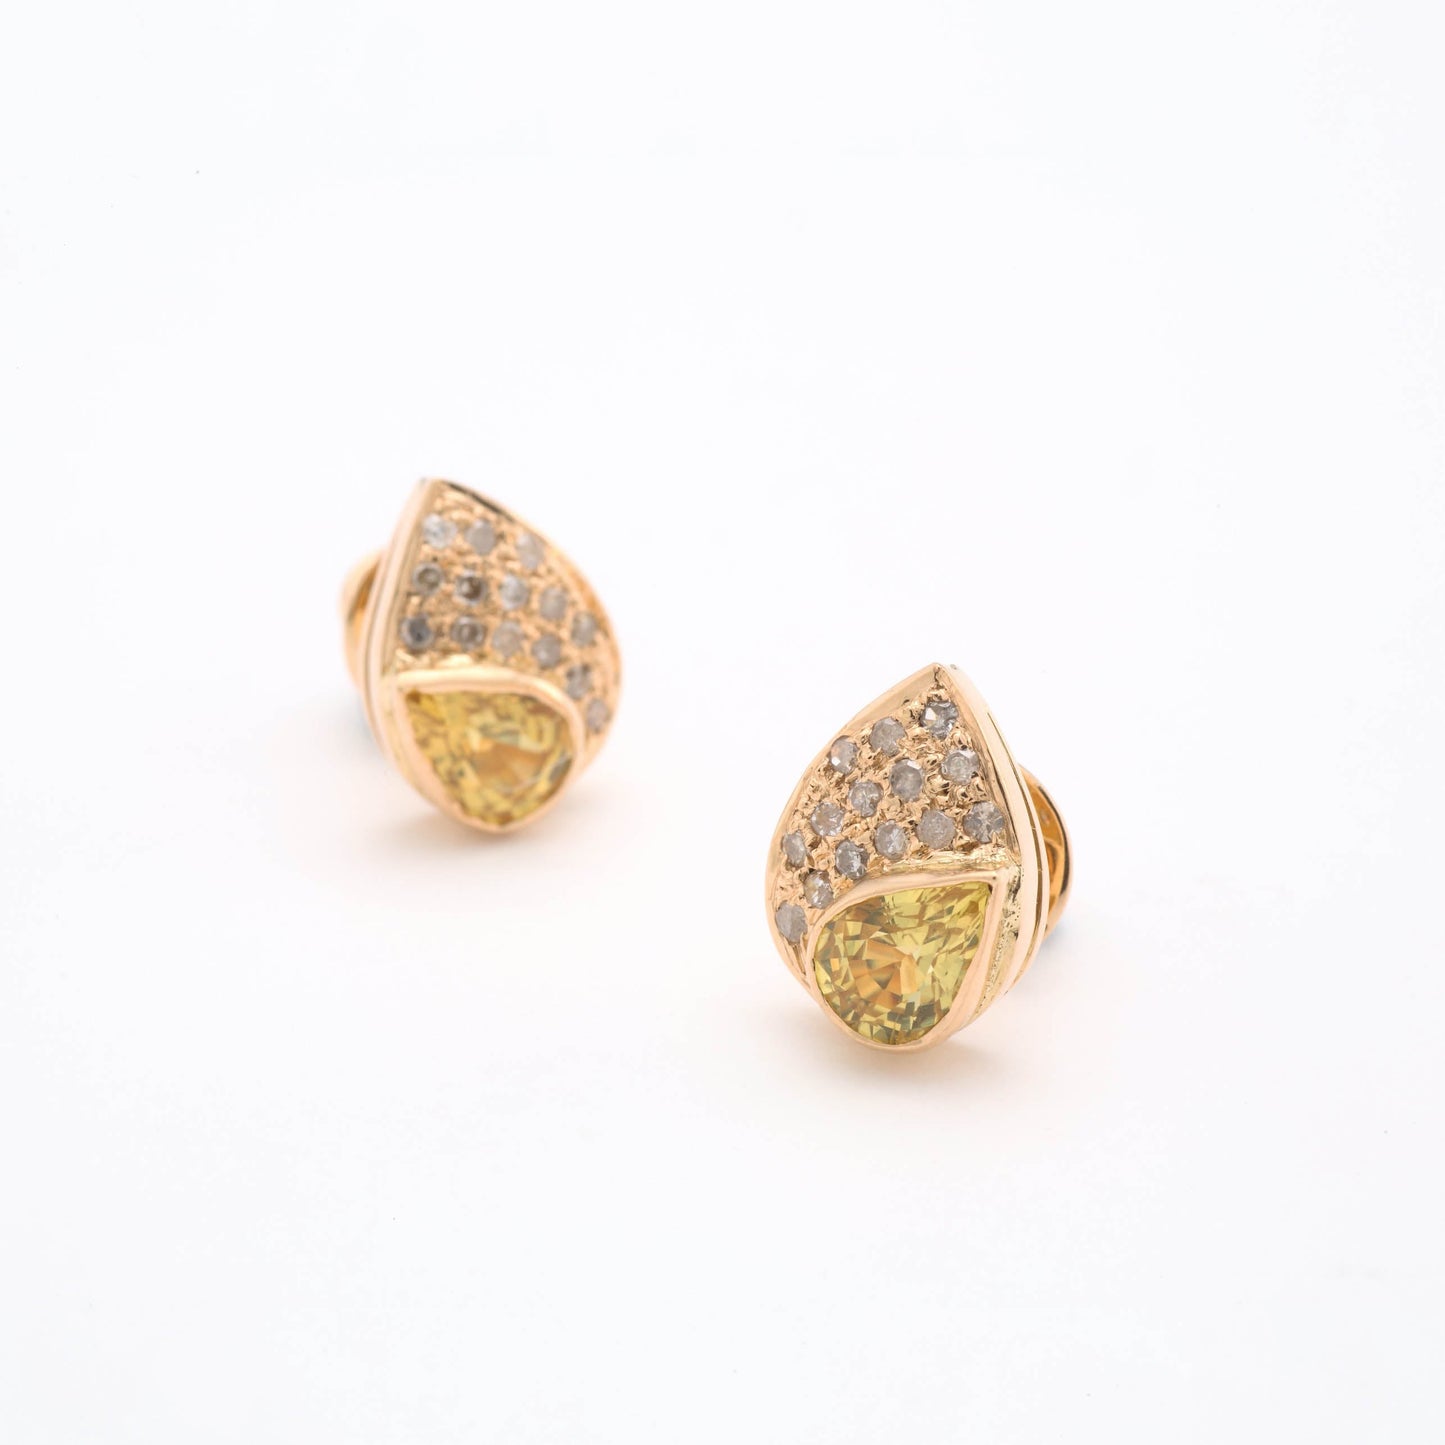 The Darpan Gold, Diamond and Yellow Sapphire Ear Studs by Rasvihar